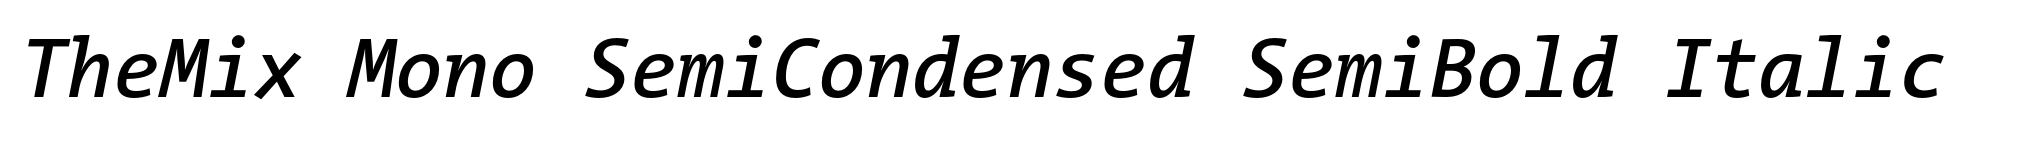 TheMix Mono SemiCondensed SemiBold Italic image